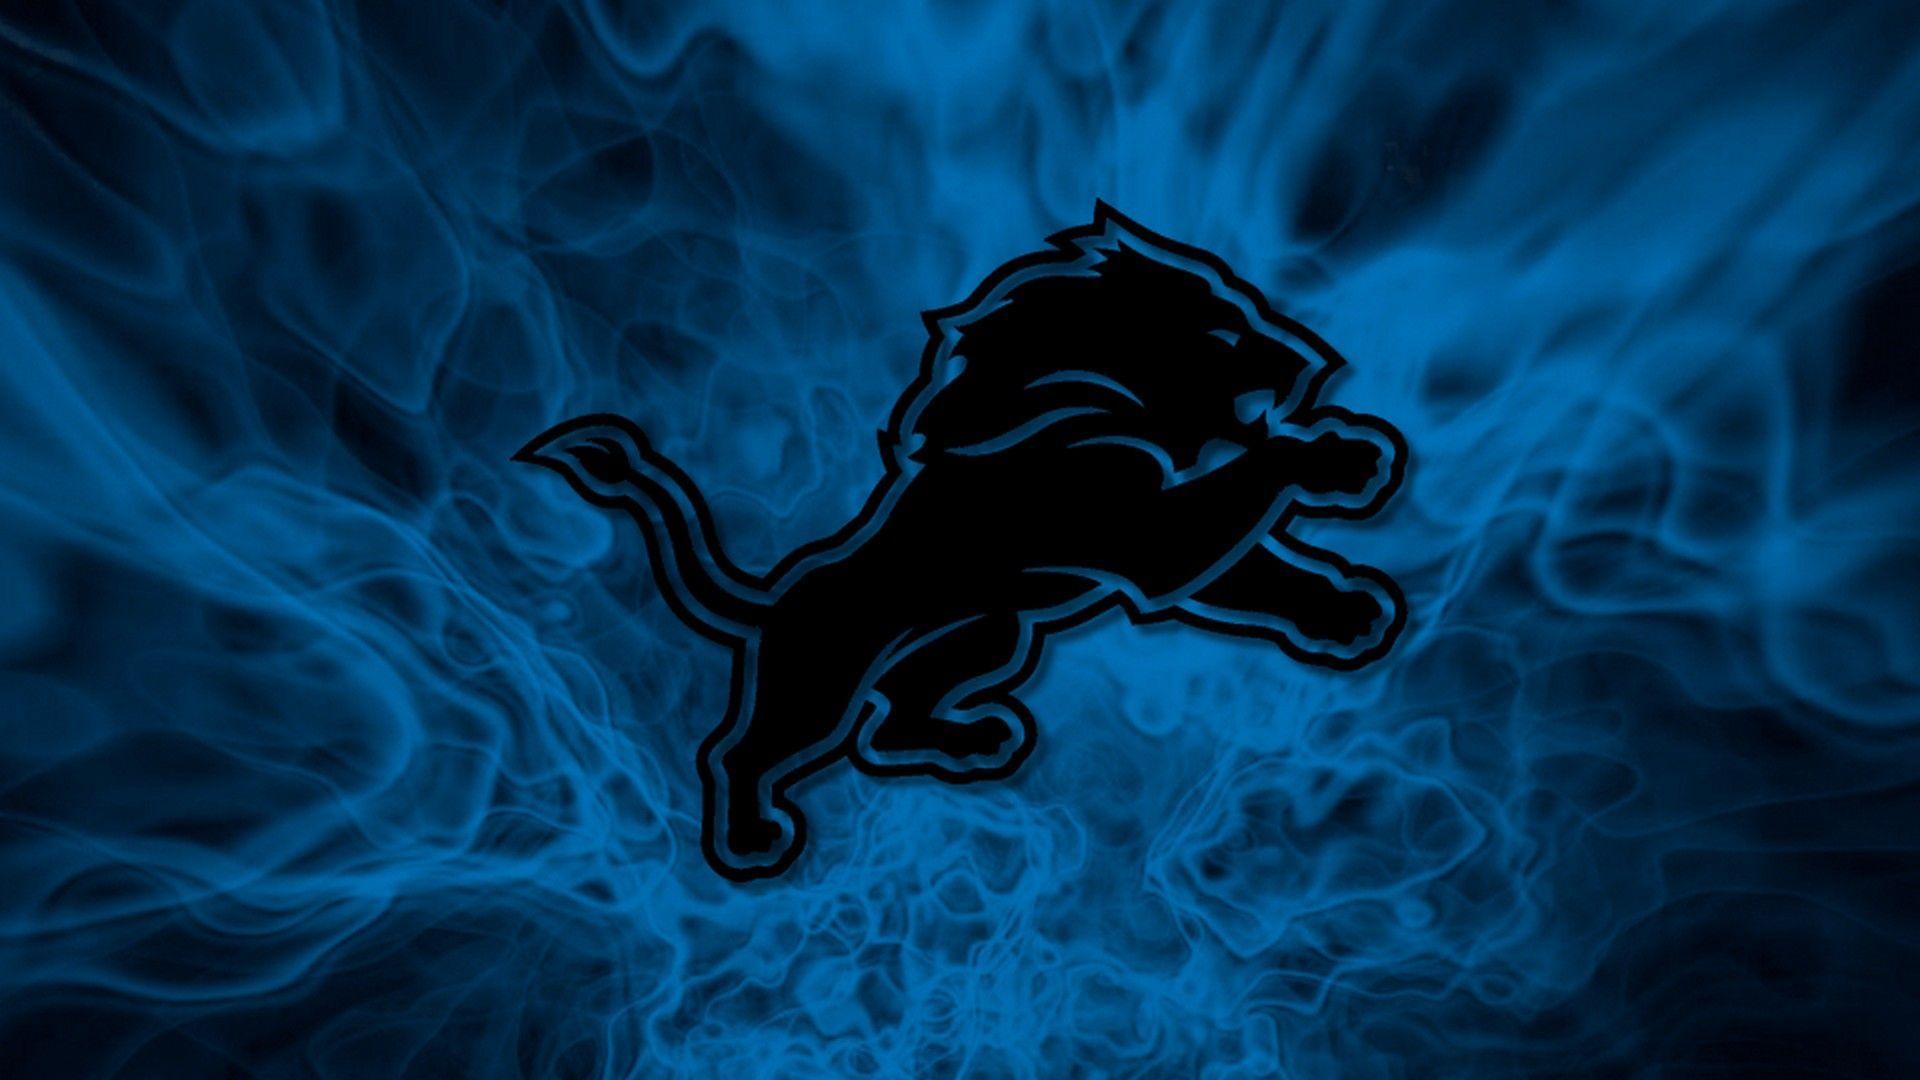 Detroit Lions Logo Hd Images For Desktop Background Important